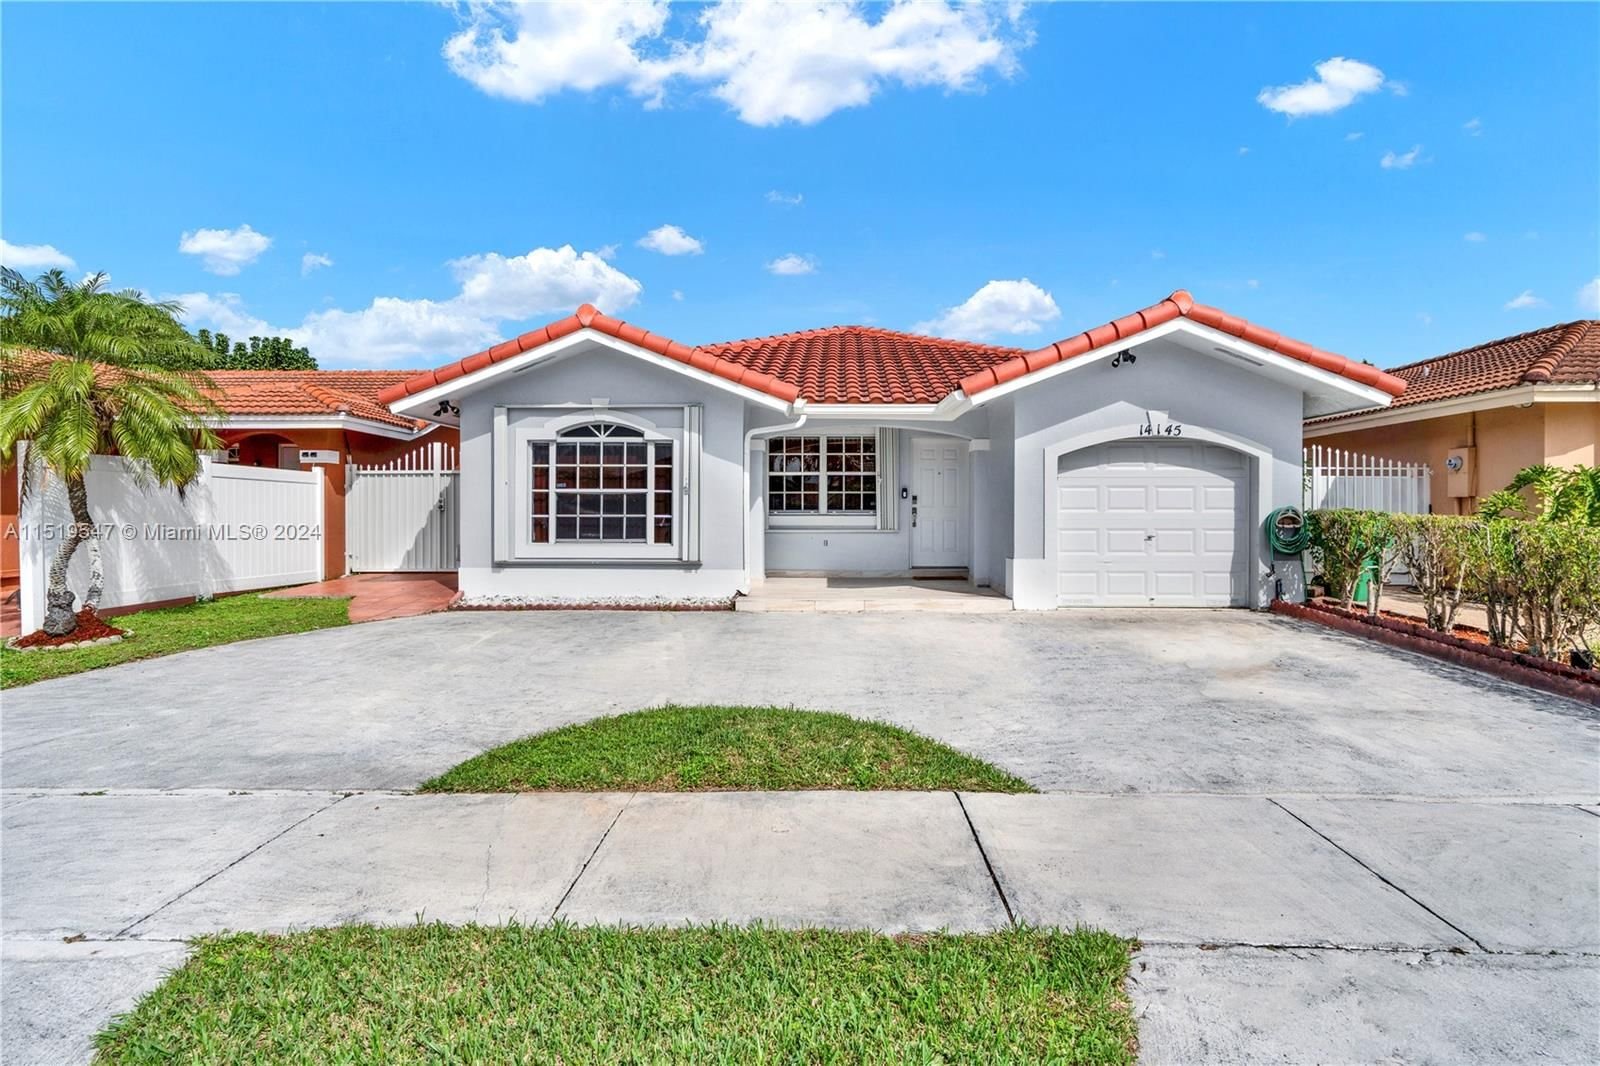 Real estate property located at 14145 145th PL, Miami-Dade County, ADVENTURE HOMES, Miami, FL